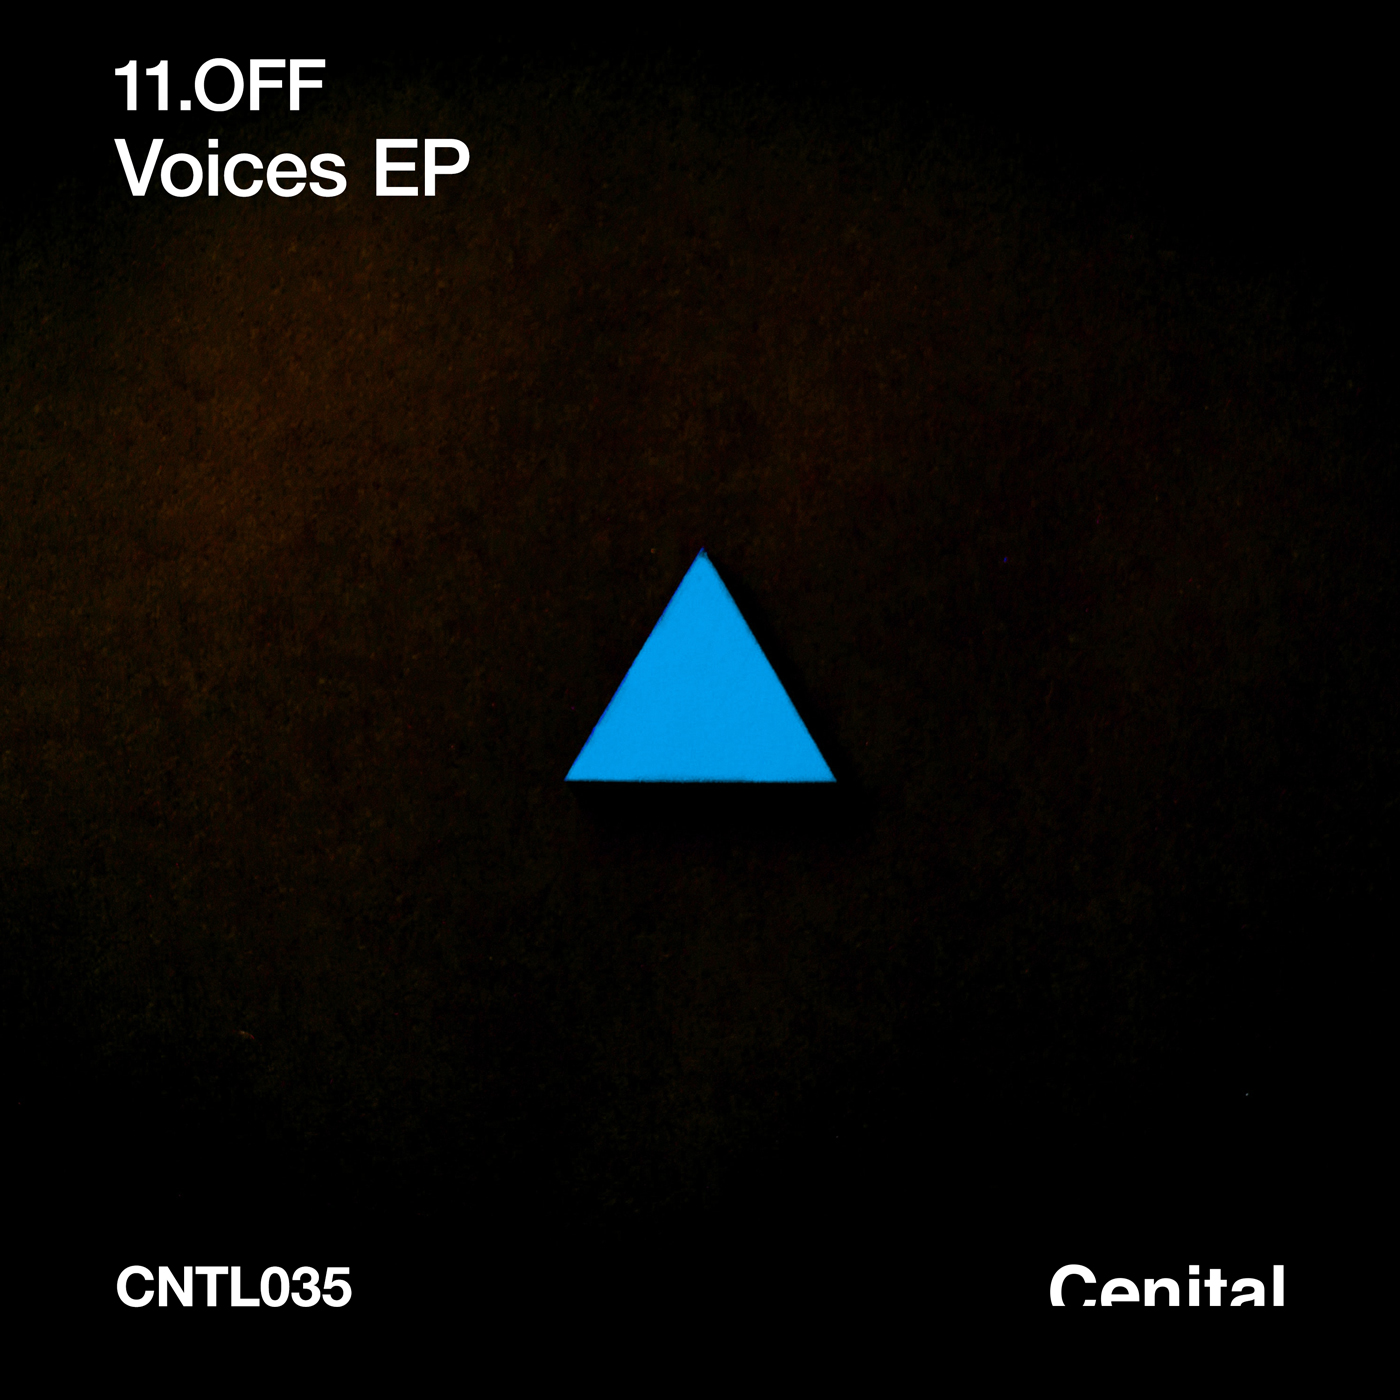 11.OFF – Voices EP [CNTL035]